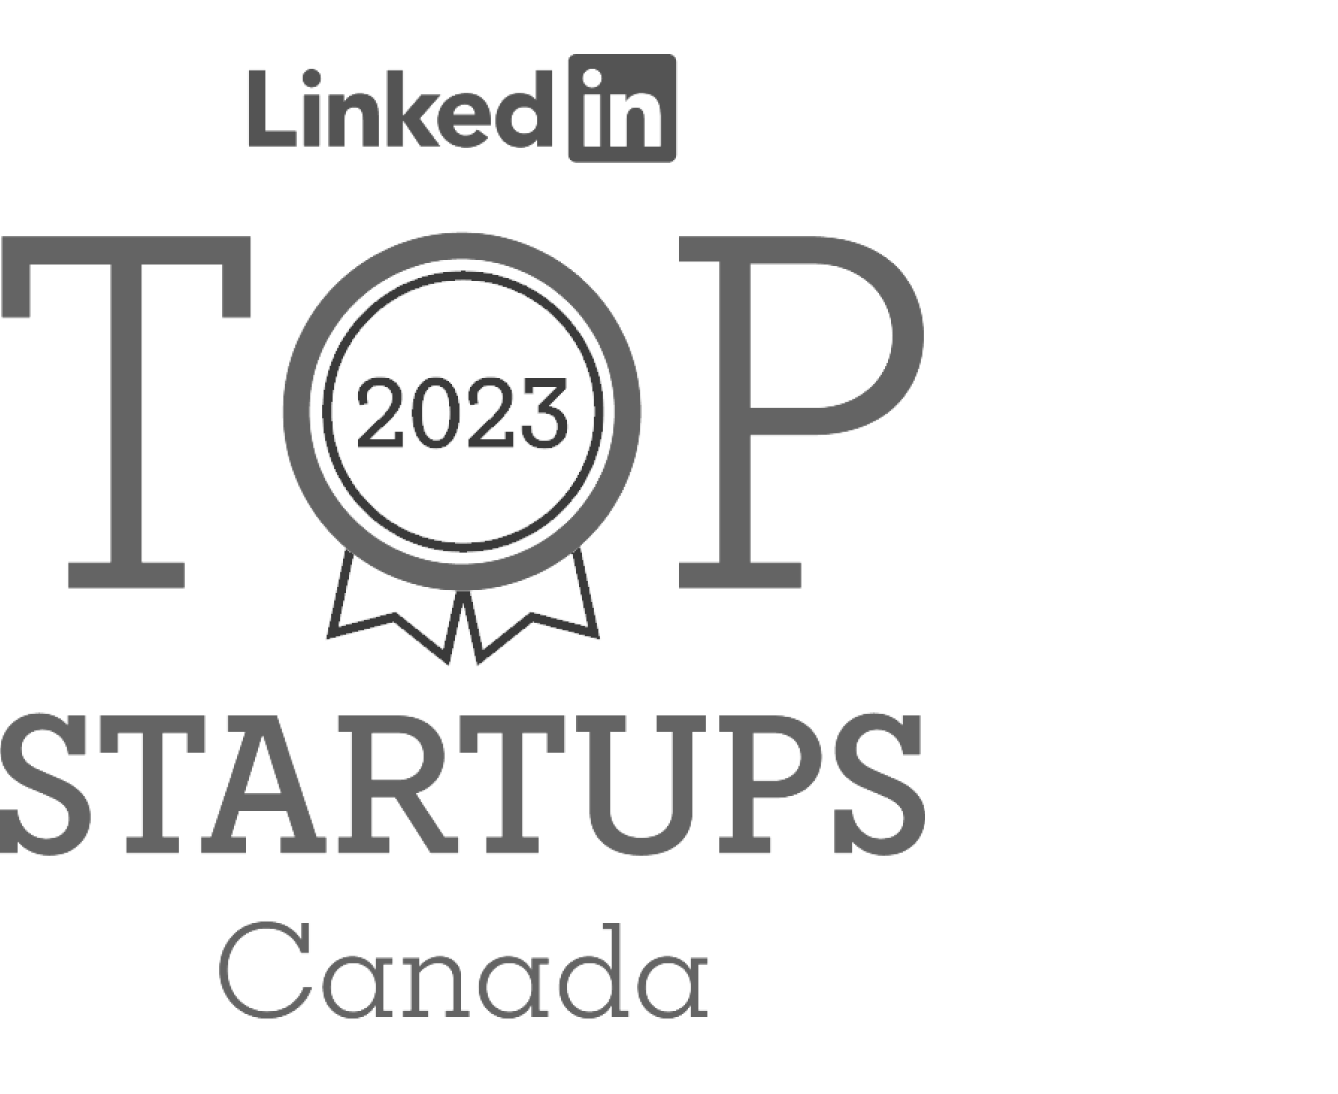 Linkedin Top 2023 Startups Canada logo